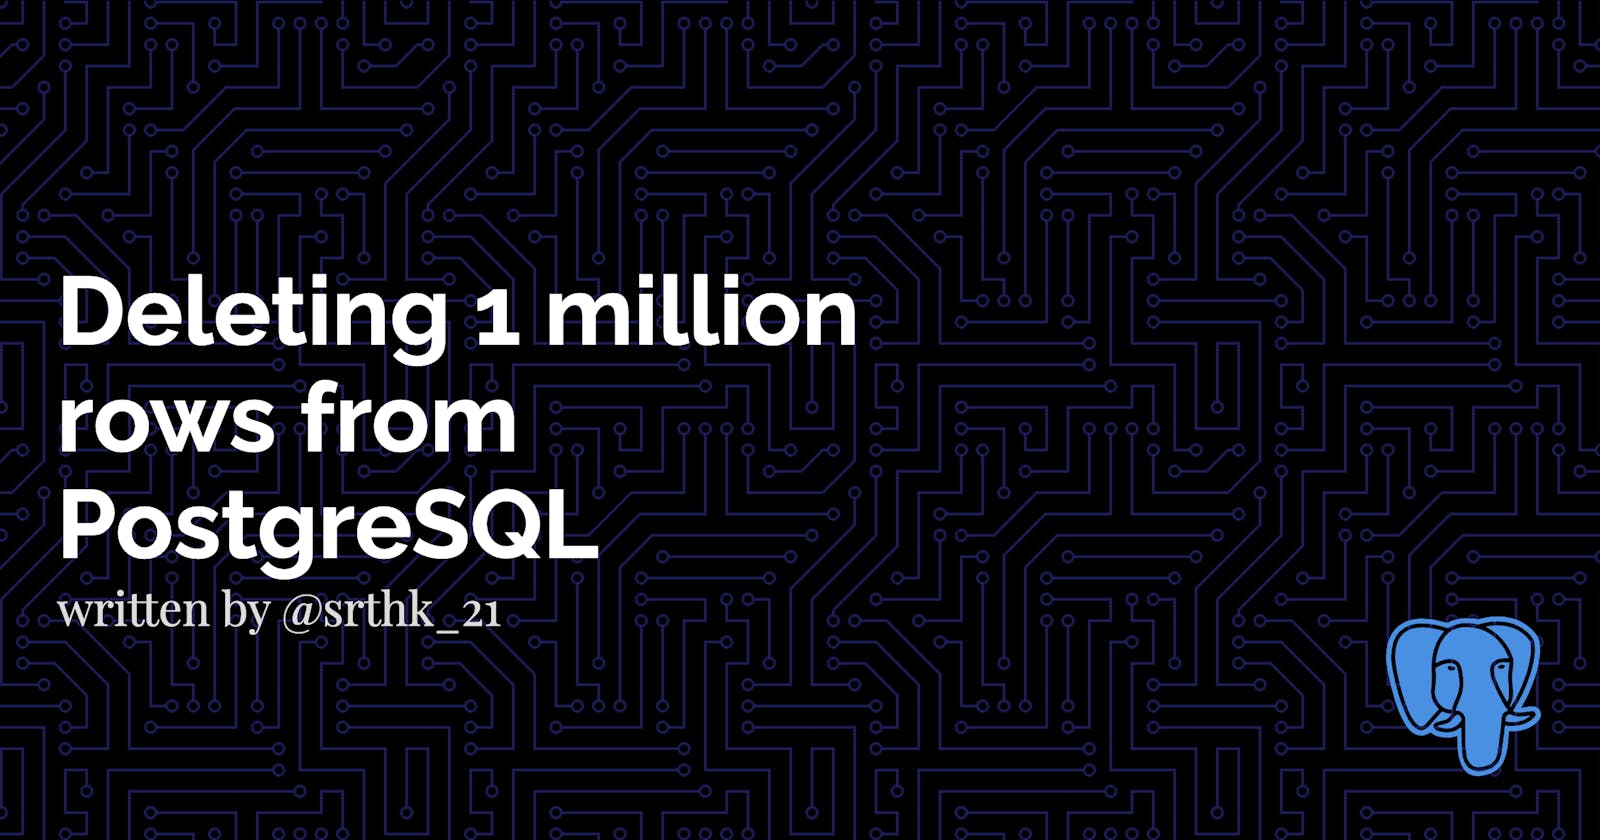 Deleting 1 million rows from PostgreSQL